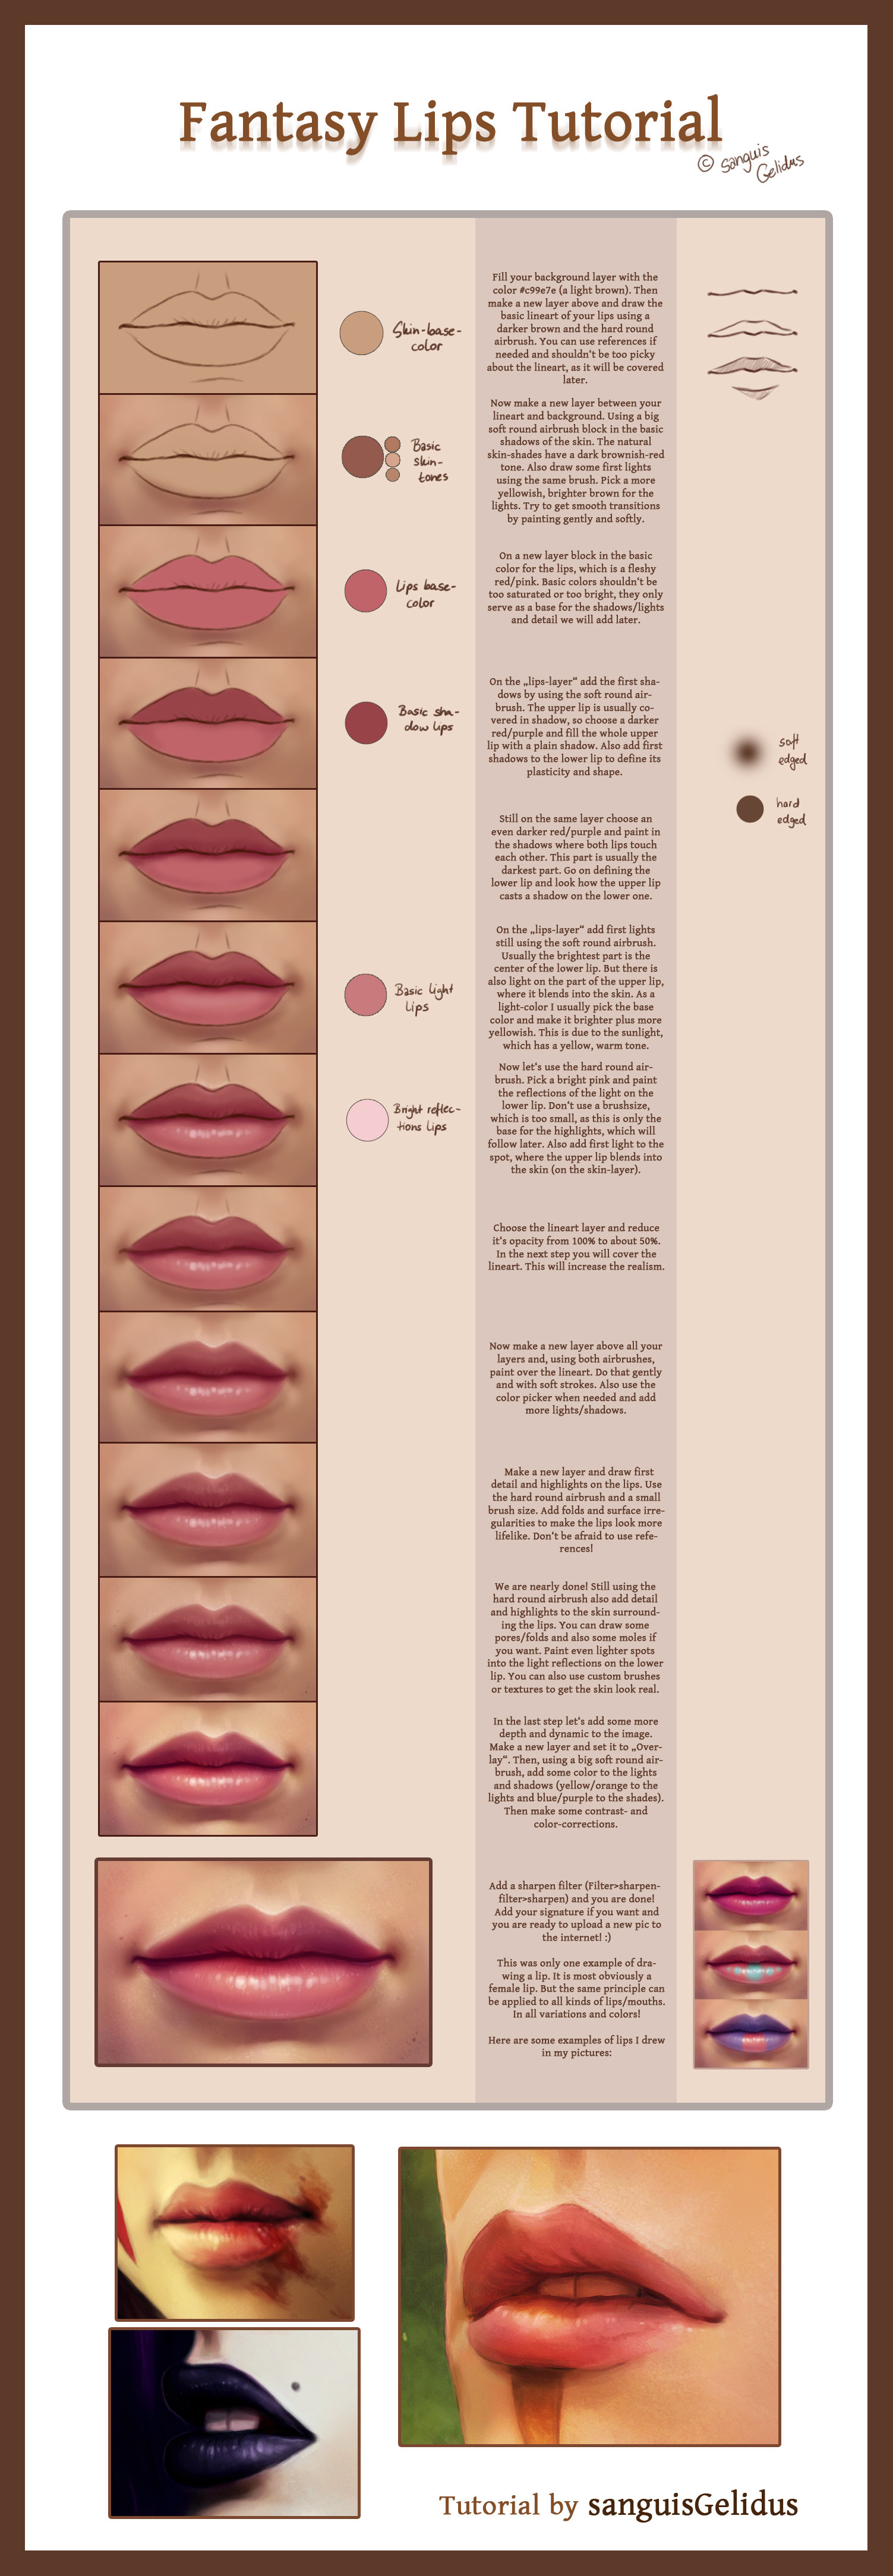 -http://fc05.deviantart.net/fs70/f/2012/211/a/b/fantasy_lips_tutorial_by_sanguisgelidus-d5965m3.jpg